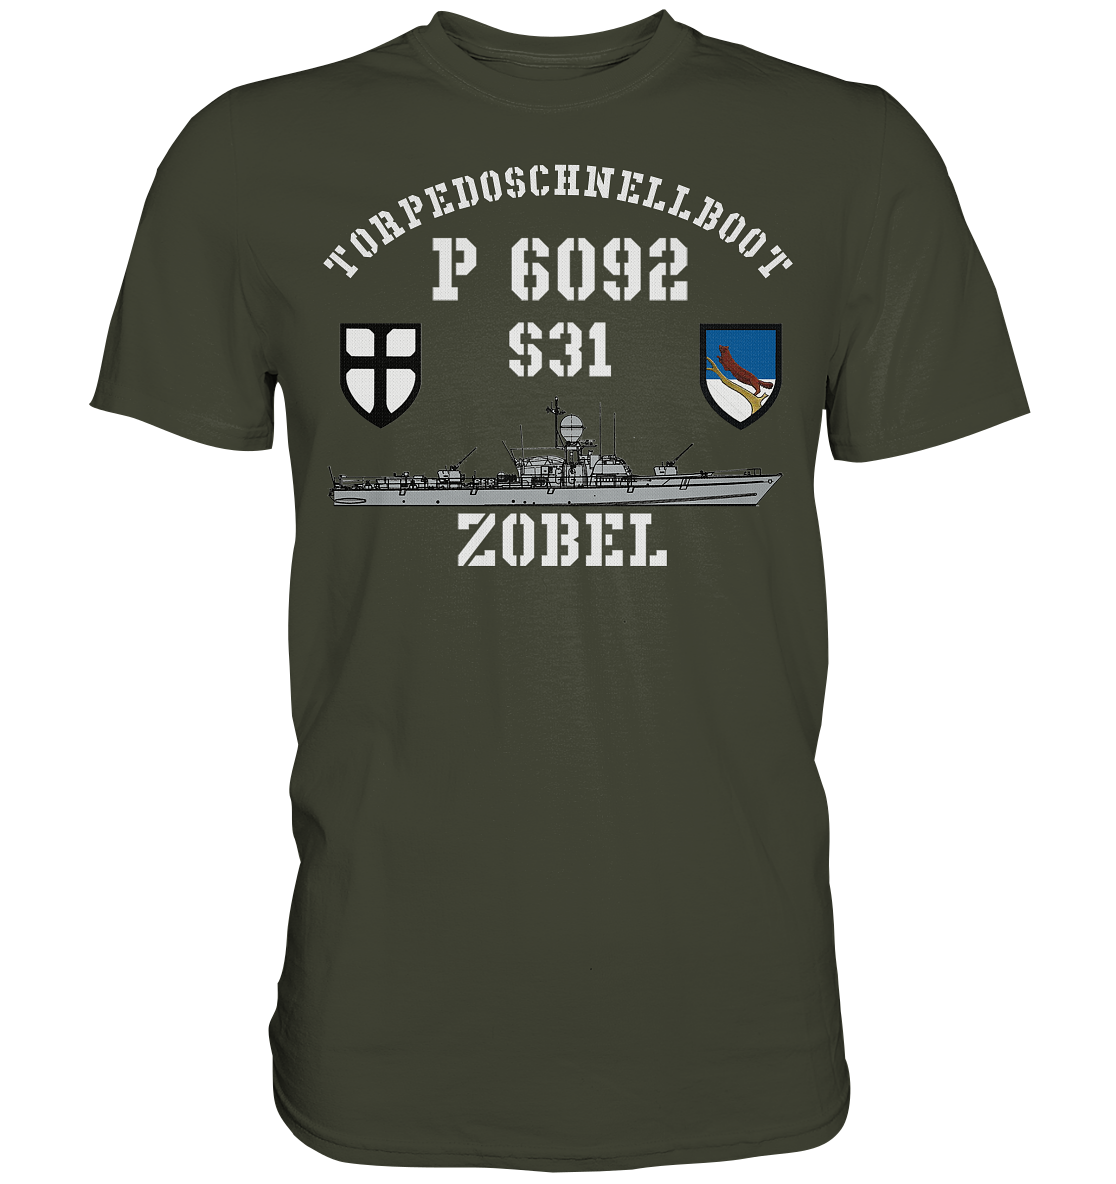 S31 ZOBEL - Premium Shirt